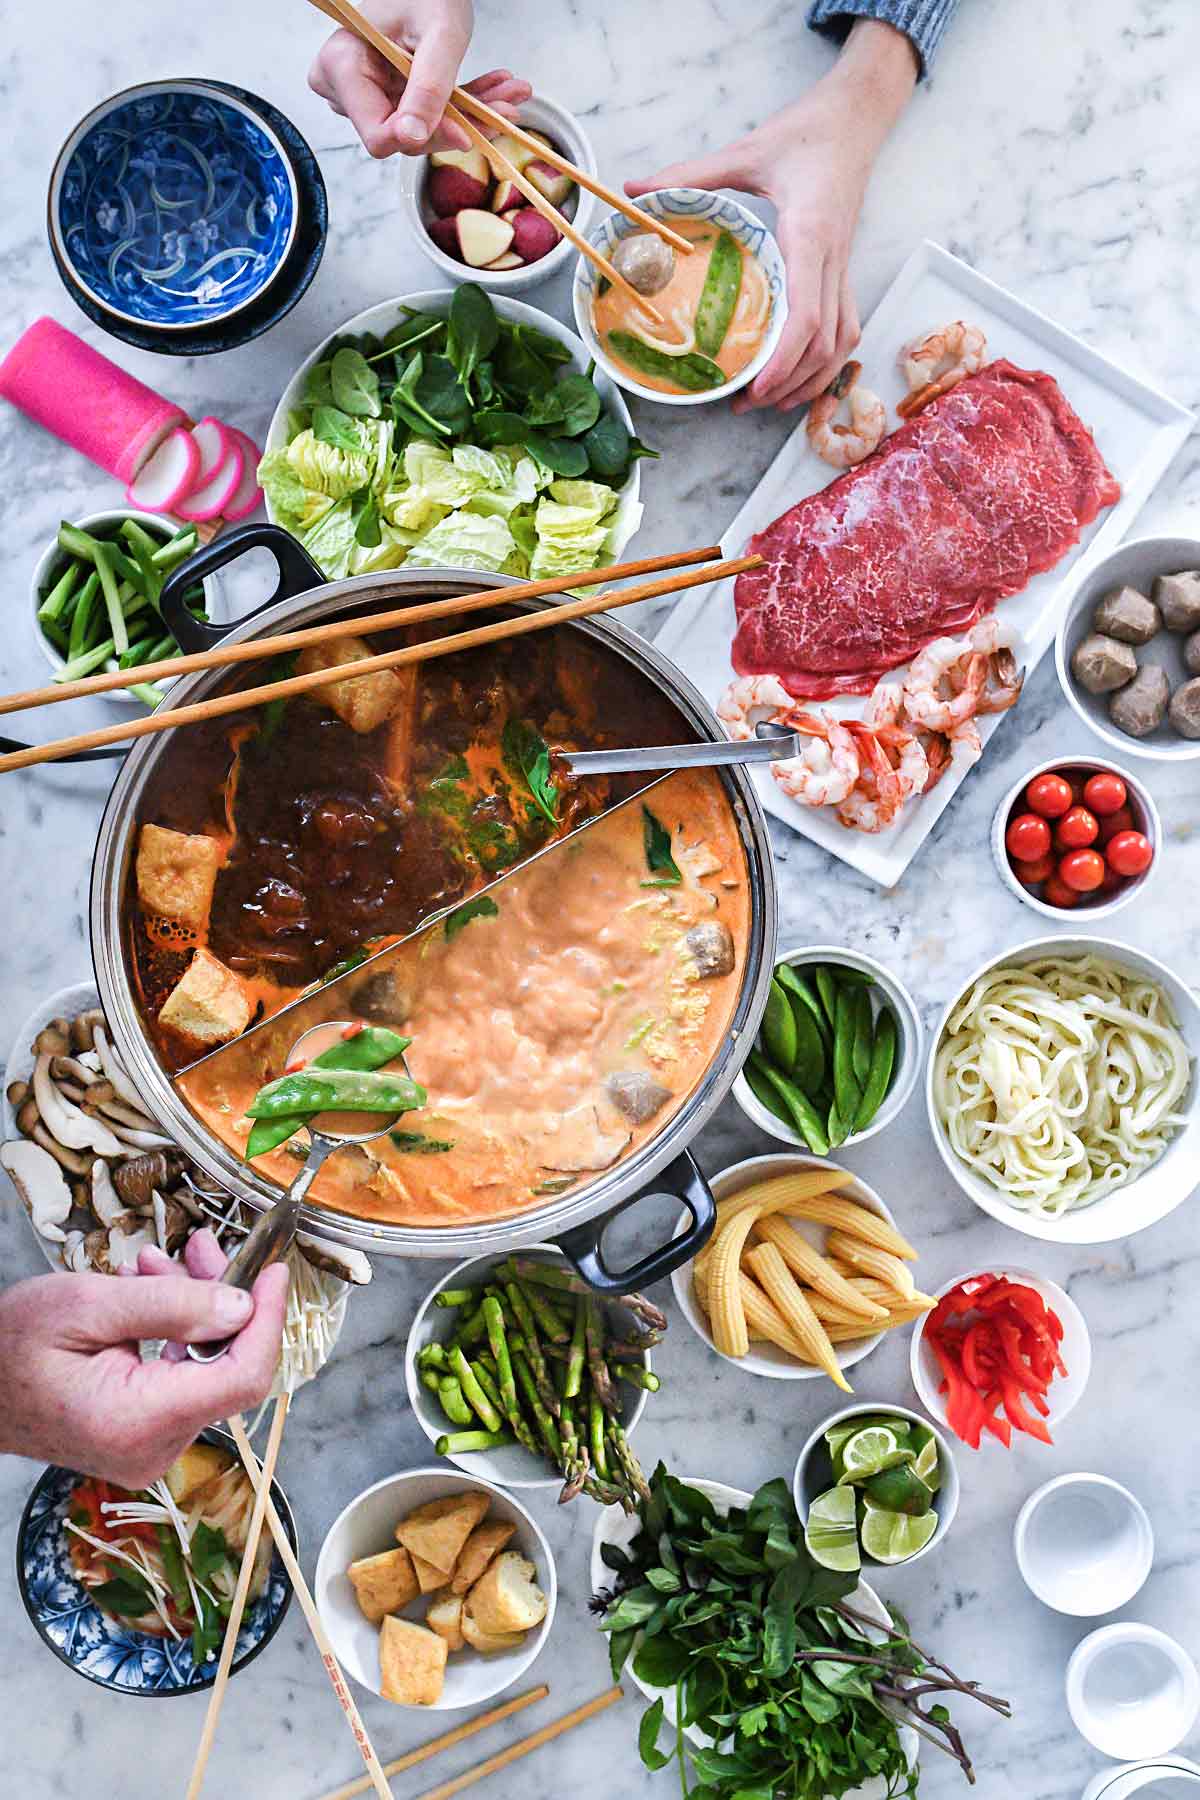 https://www.foodiecrush.com/wp-content/uploads/2018/02/Asian-Red-Curry-Hot-Pot-foodiecrush.com-044.jpg